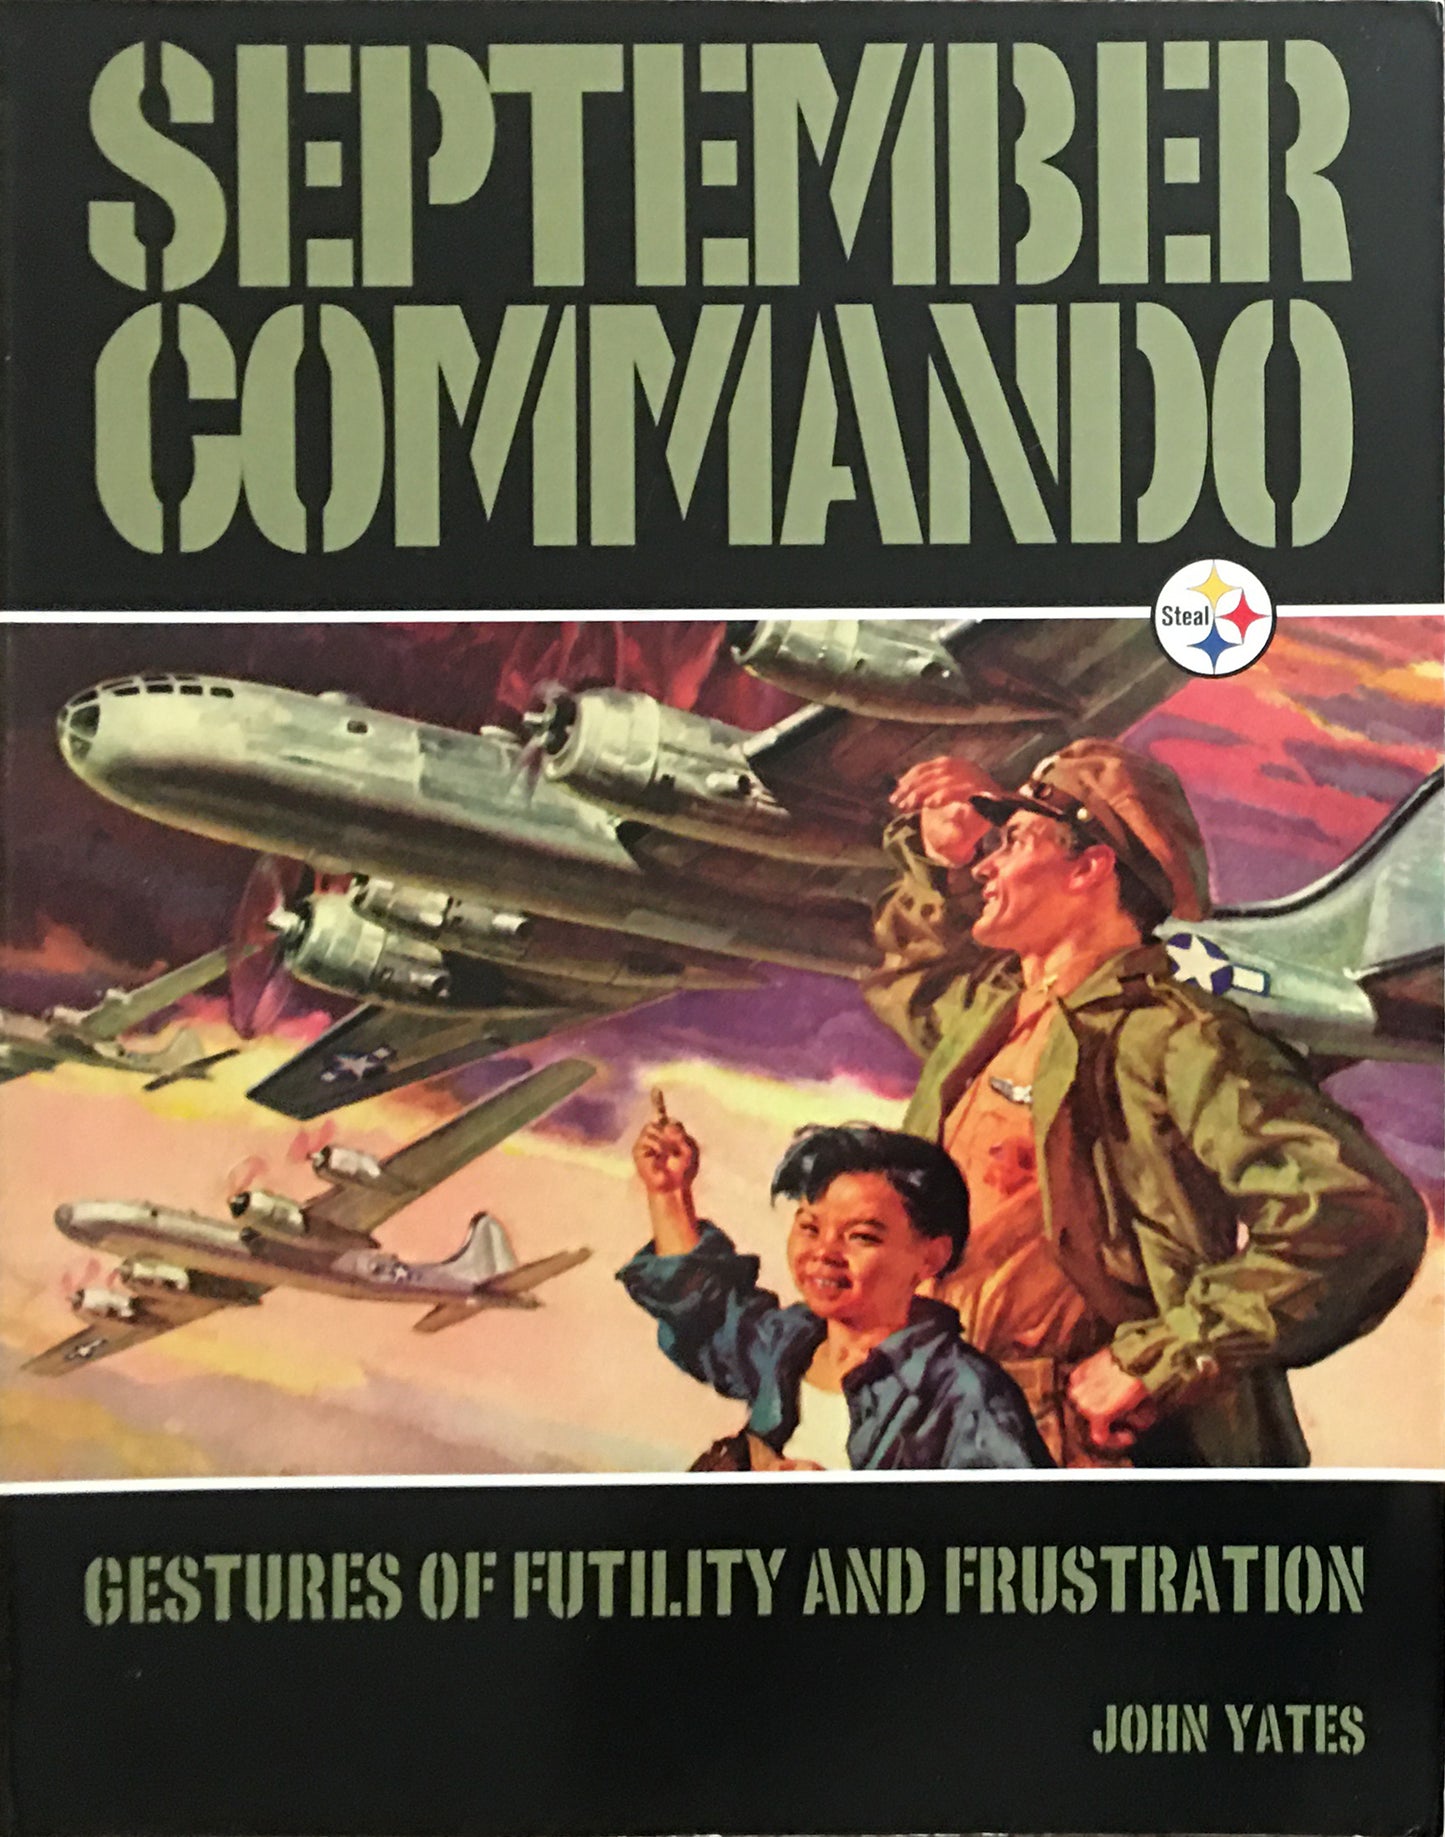 Stealworks "September Commando: Gestures of Futility and Frustration" Book